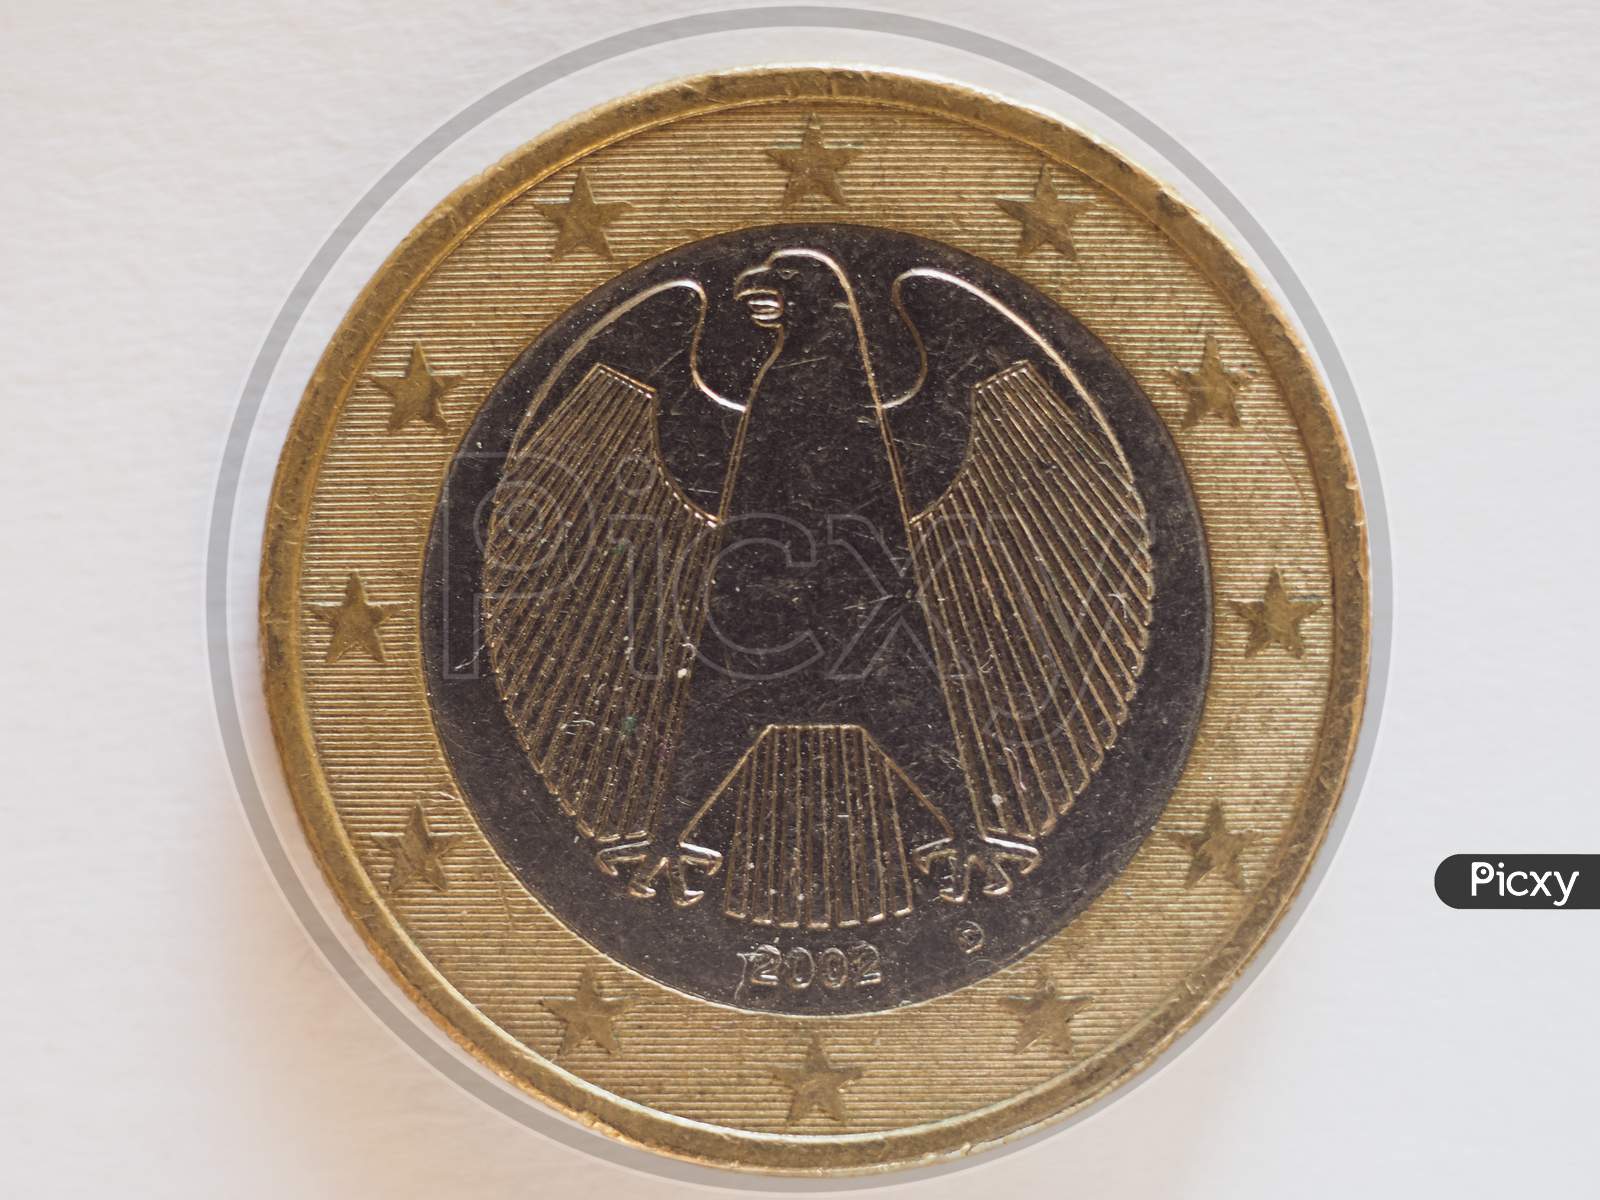 1 Euro Coin, European Union